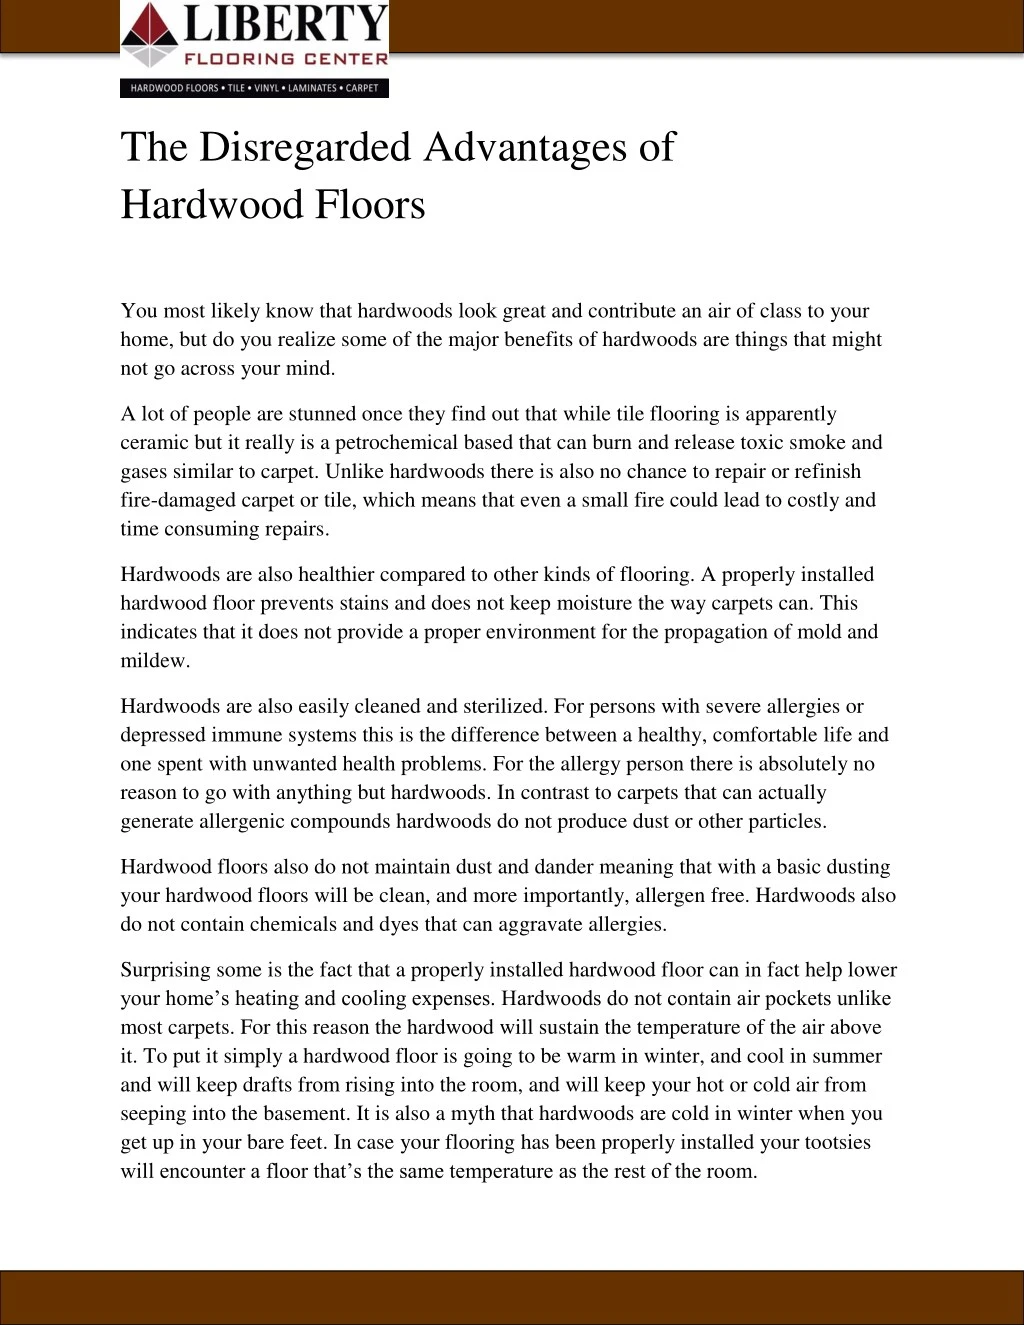 the disregarded advantages of hardwood floors